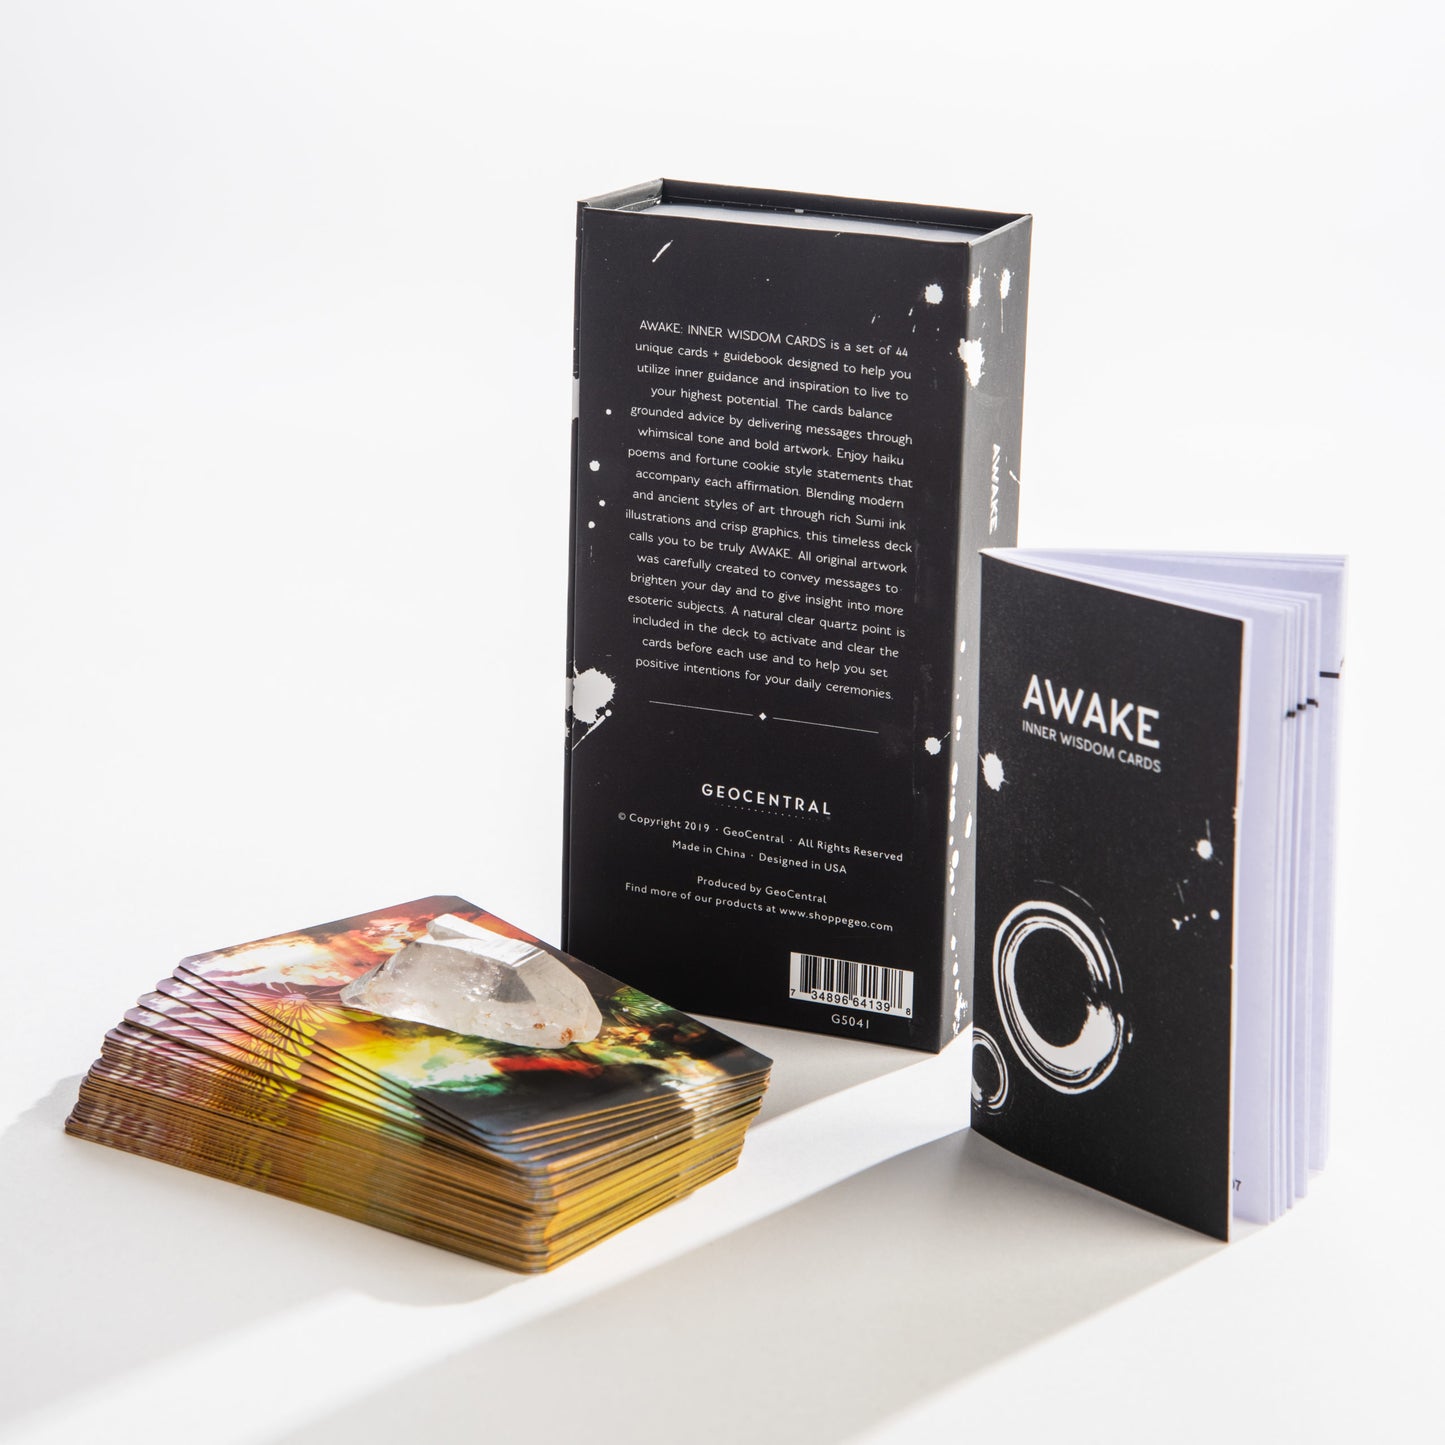 AWAKE: Inner Wisdom Cards & Crystal Set